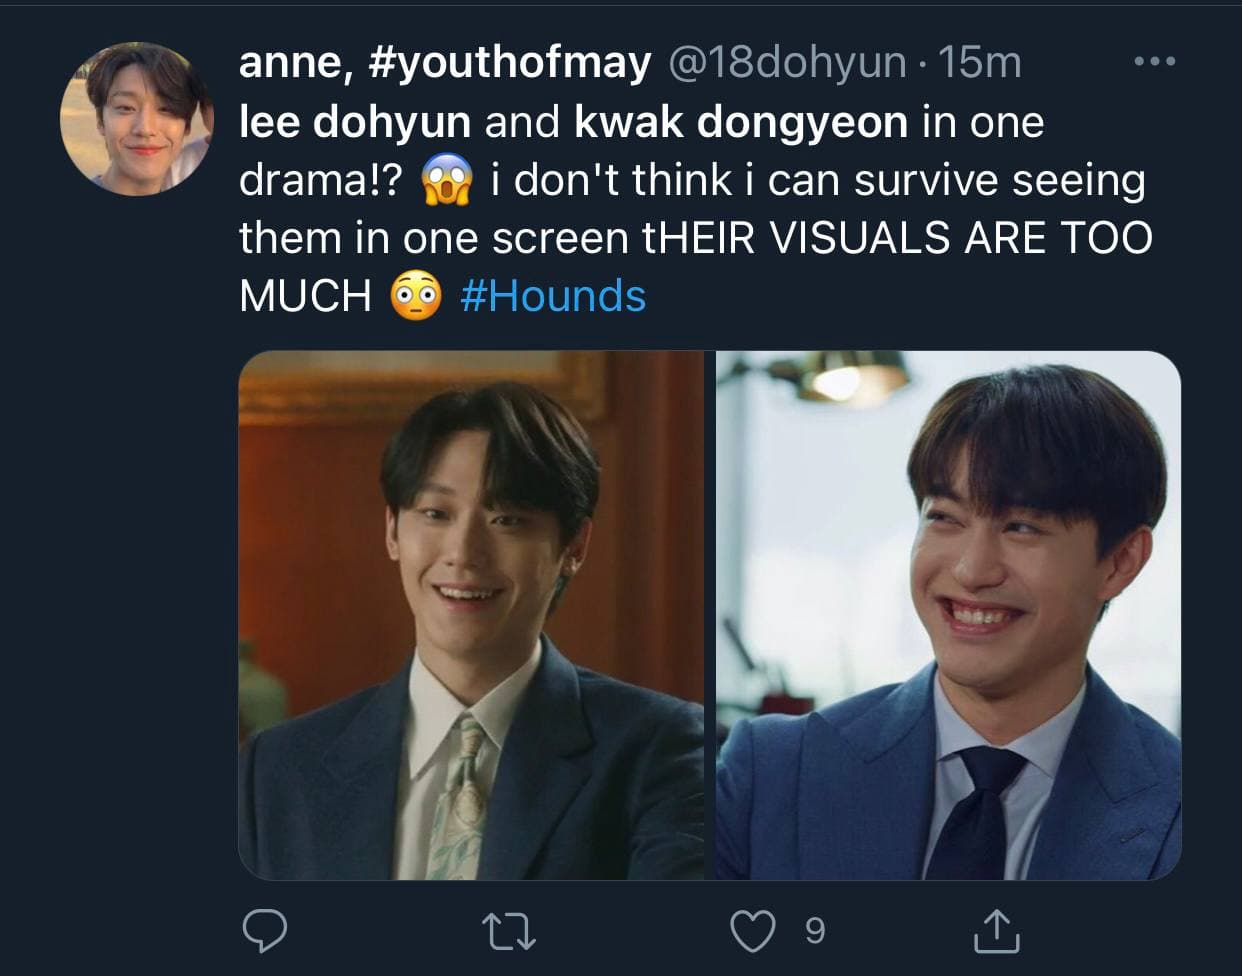 do-hyun dong-yeon hounds - i-fans' reaction 2